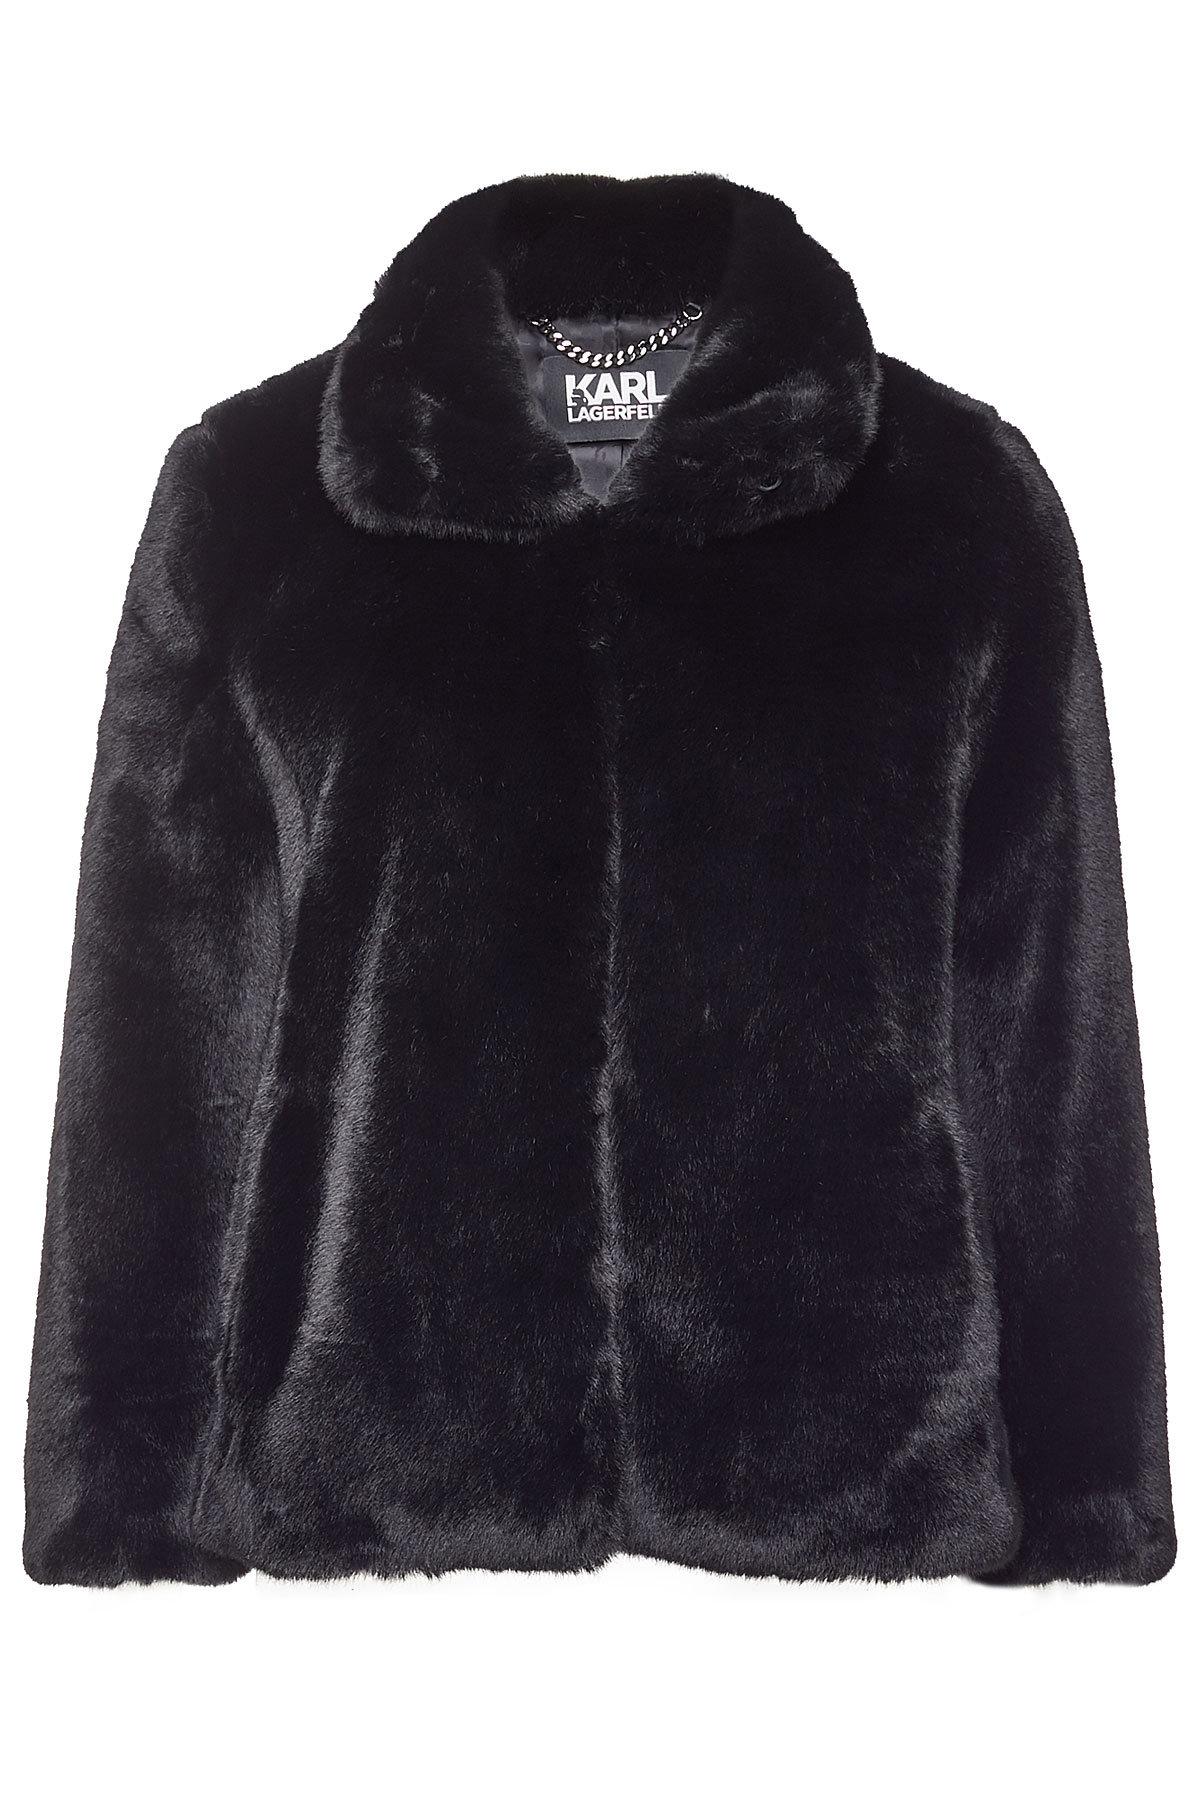 Karl Lagerfeld Faux Fur Jacket With Logo In Black | ModeSens